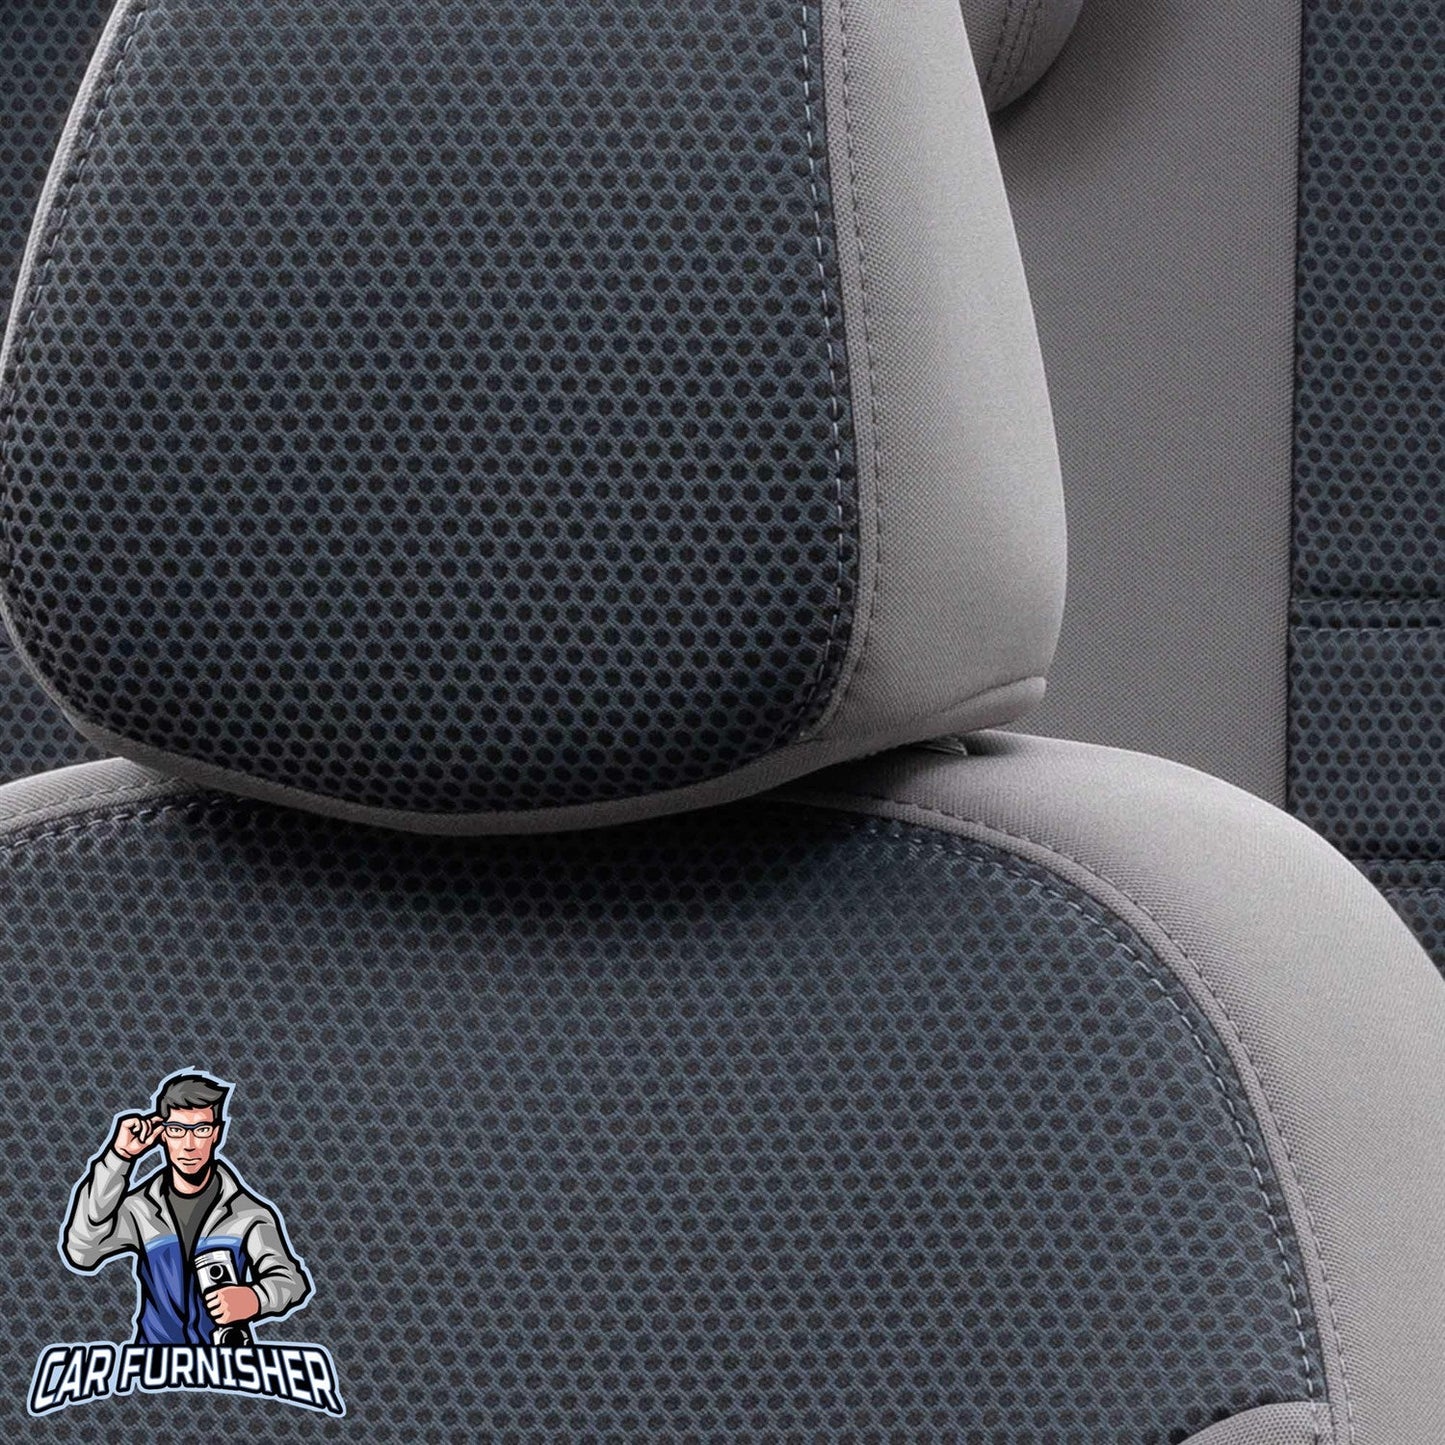 Toyota Yaris Seat Cover Original Jacquard Design Smoked Jacquard Fabric